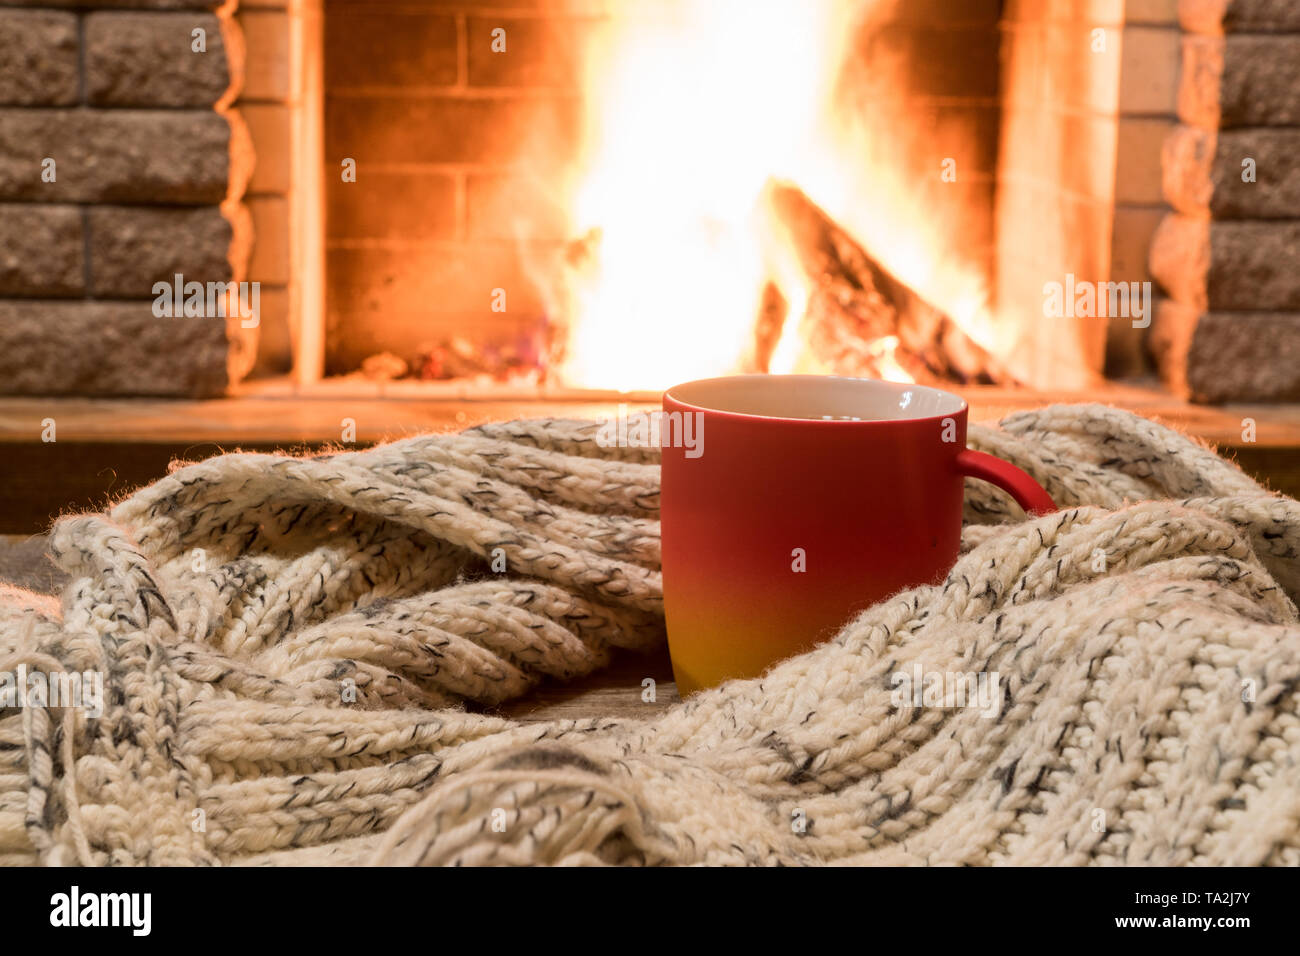 https://c8.alamy.com/comp/TA2J7Y/big-mug-with-tea-and-warm-wool-scarf-near-cozy-fireplace-in-country-house-winter-vacation-TA2J7Y.jpg